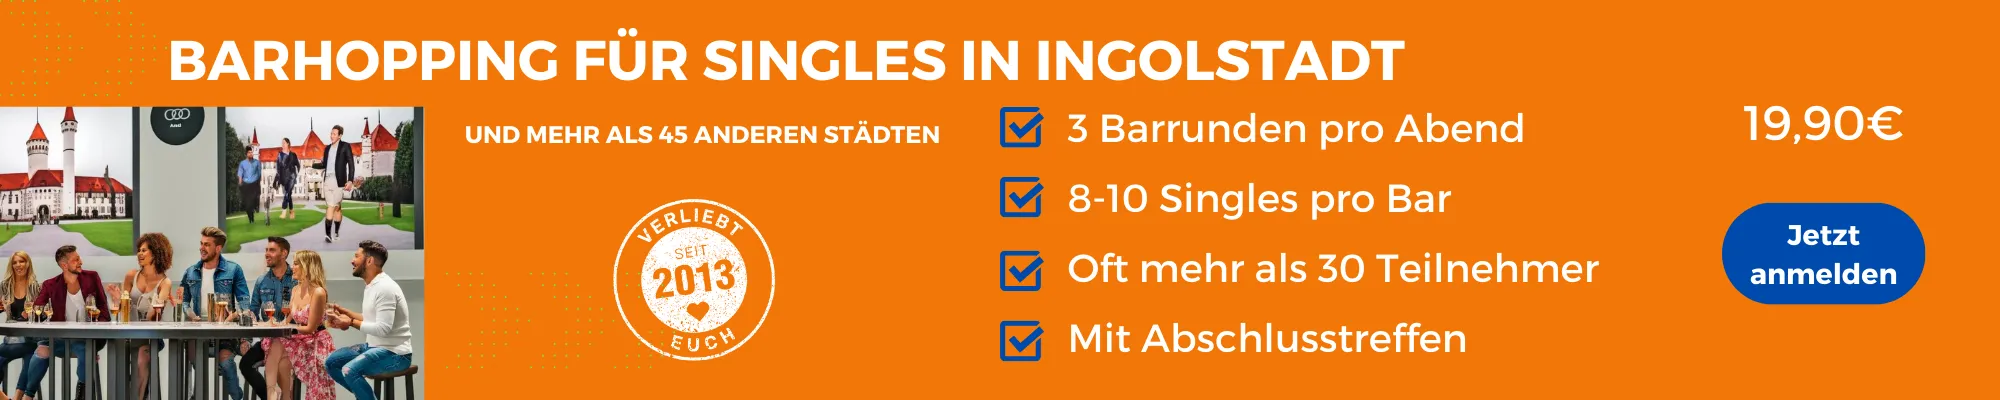 Face to Face Ingolstadt: Barhopping für Singles in Ingolstadt